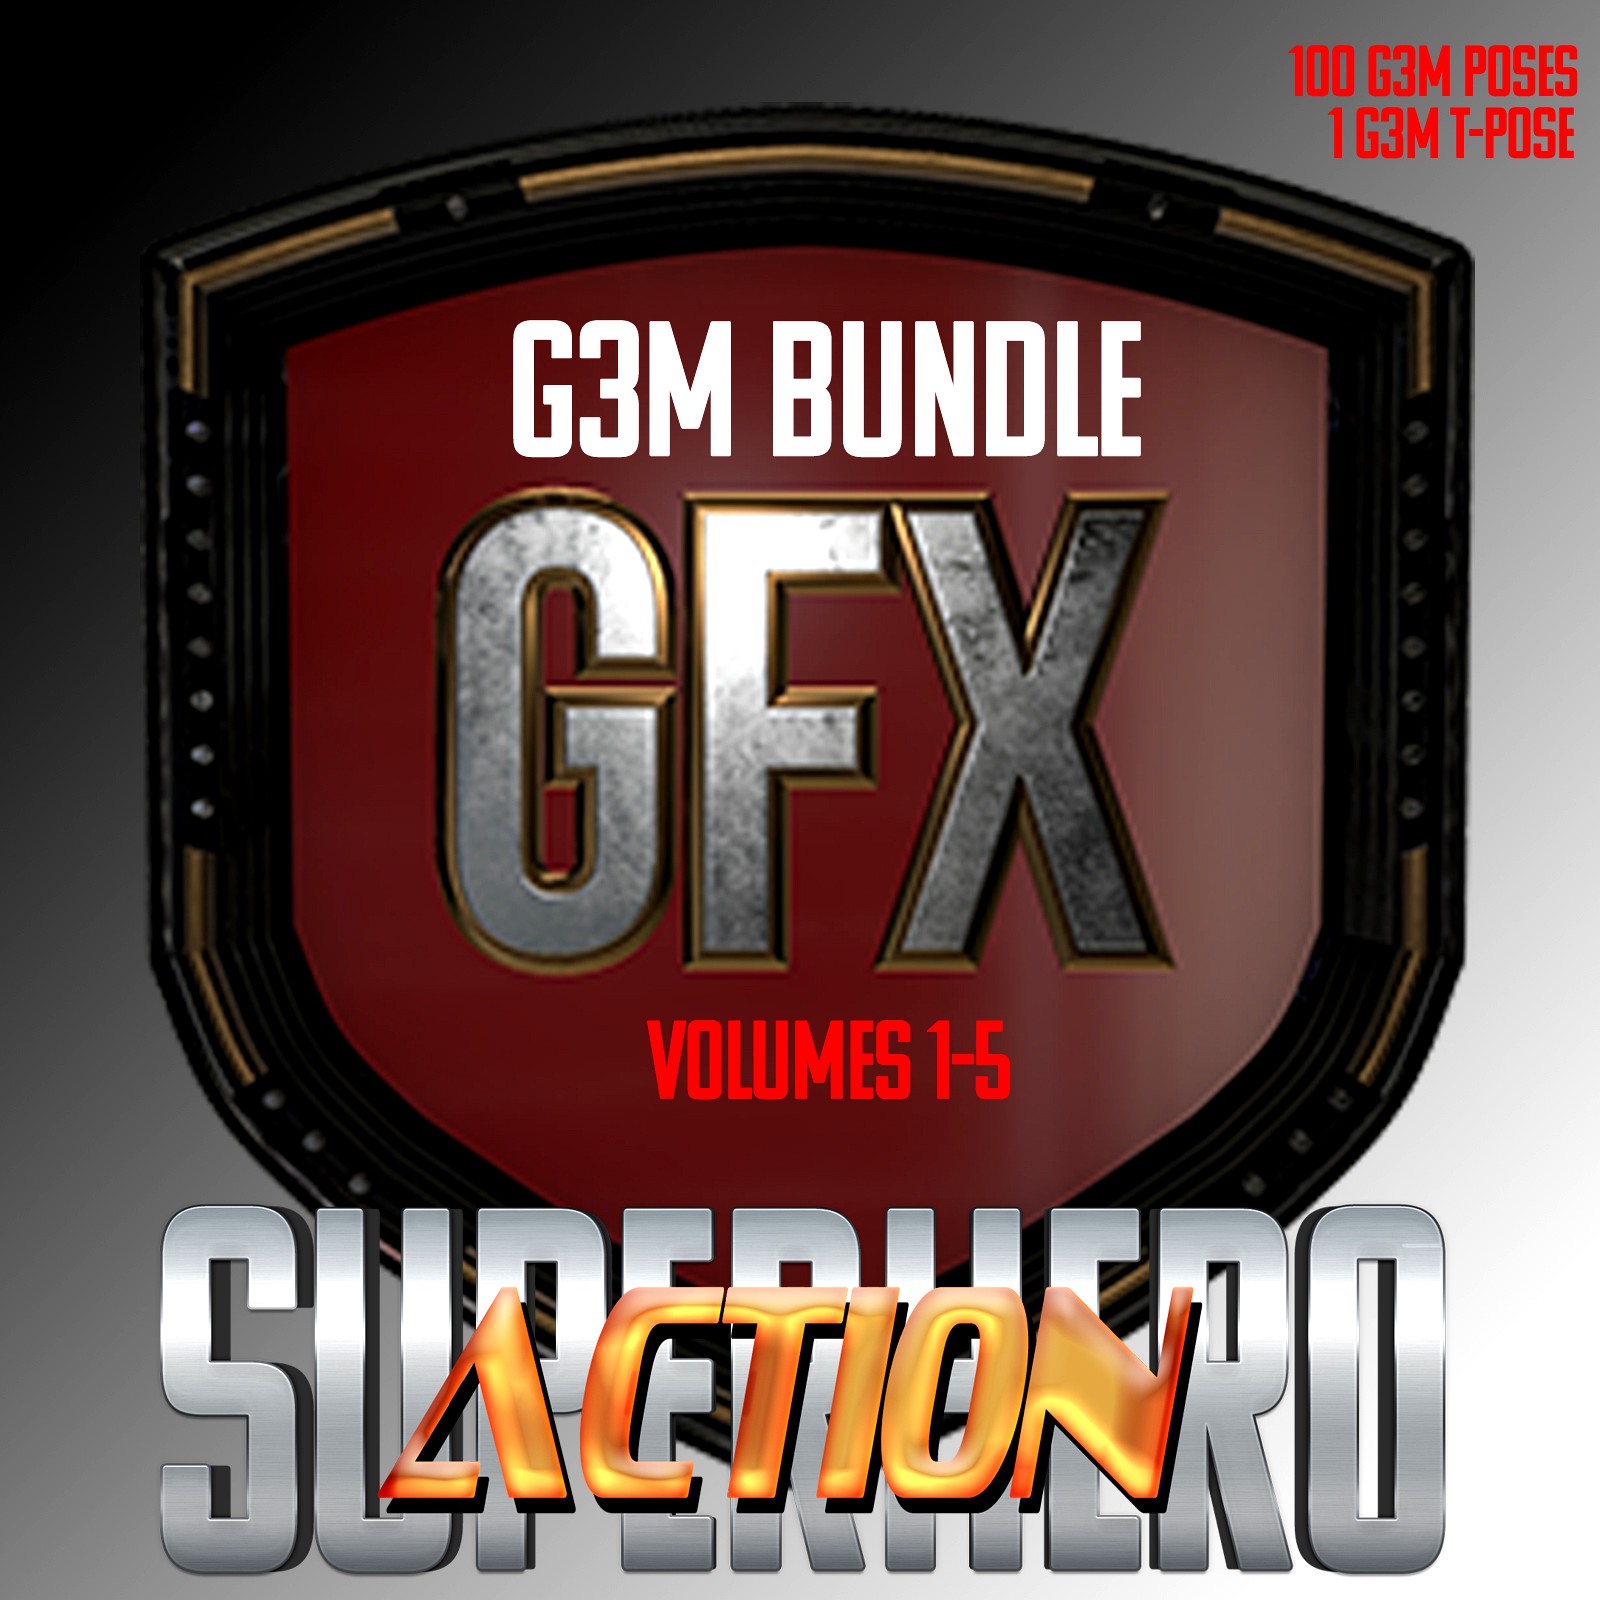 SuperHero Action Bundle for G3M